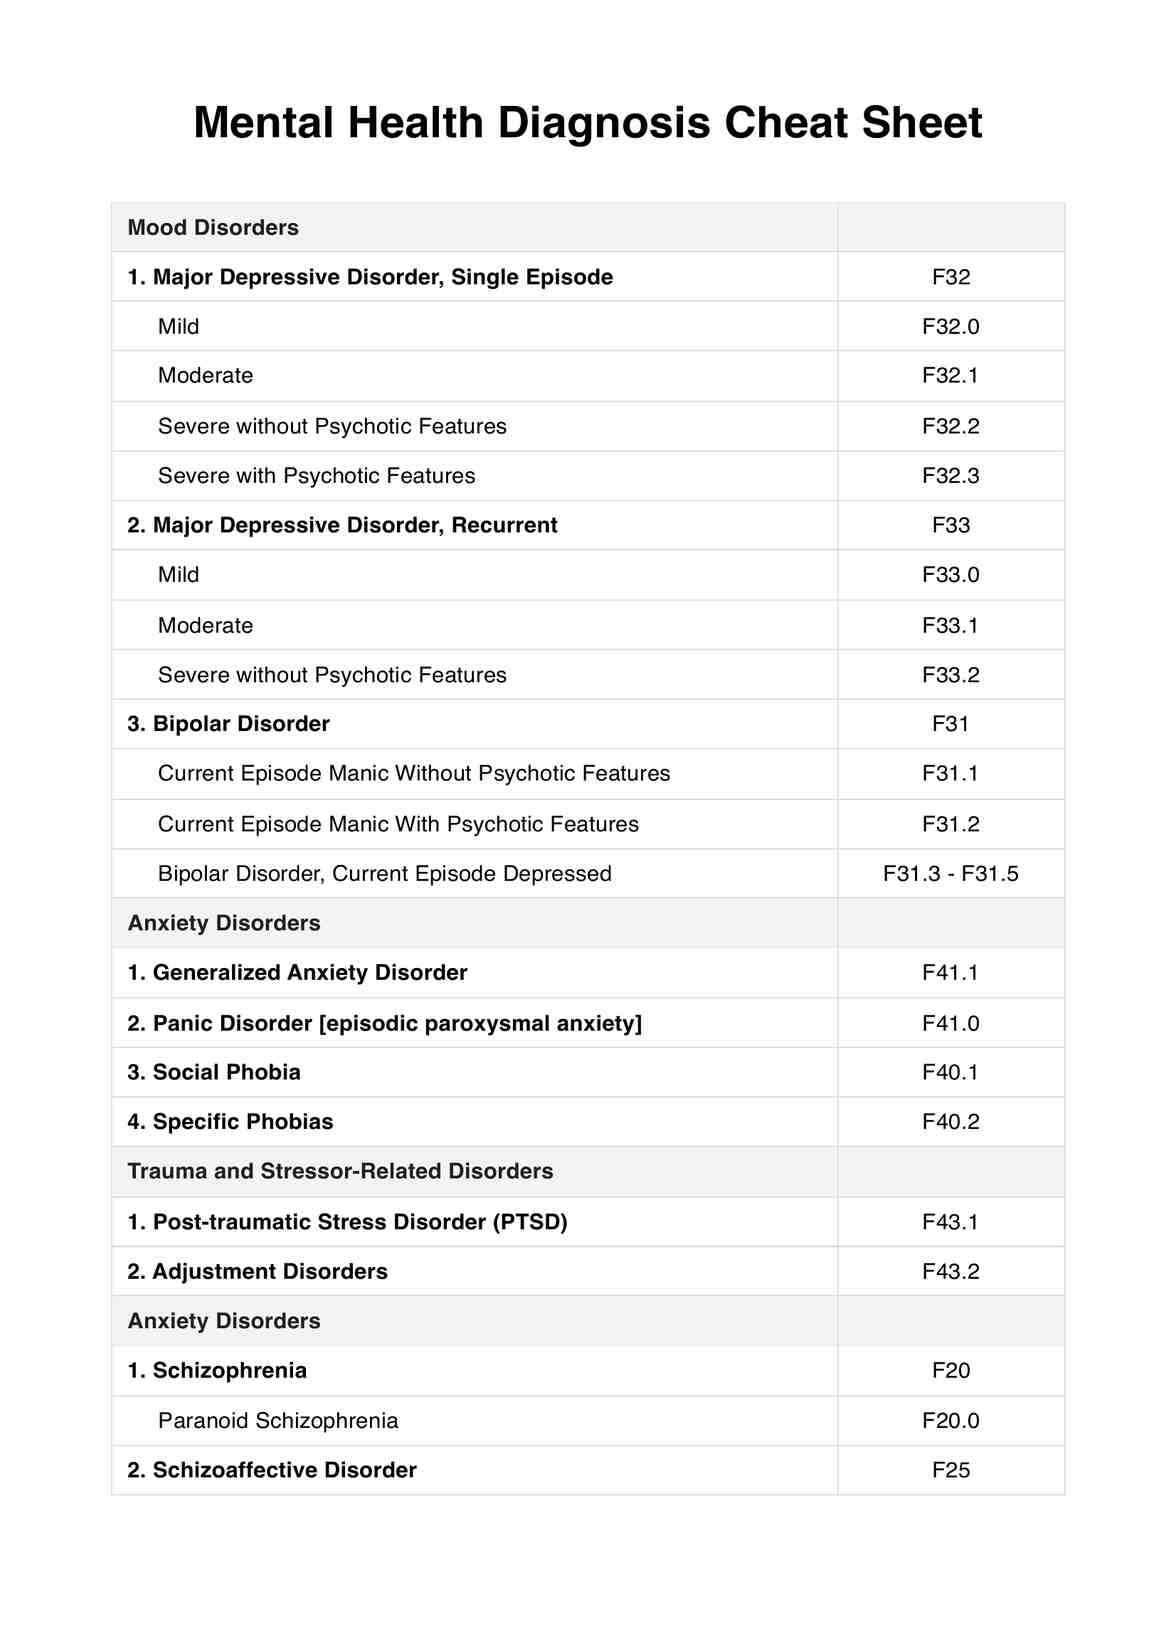 Mental Health Diagnosis Cheat Sheet PDF Example